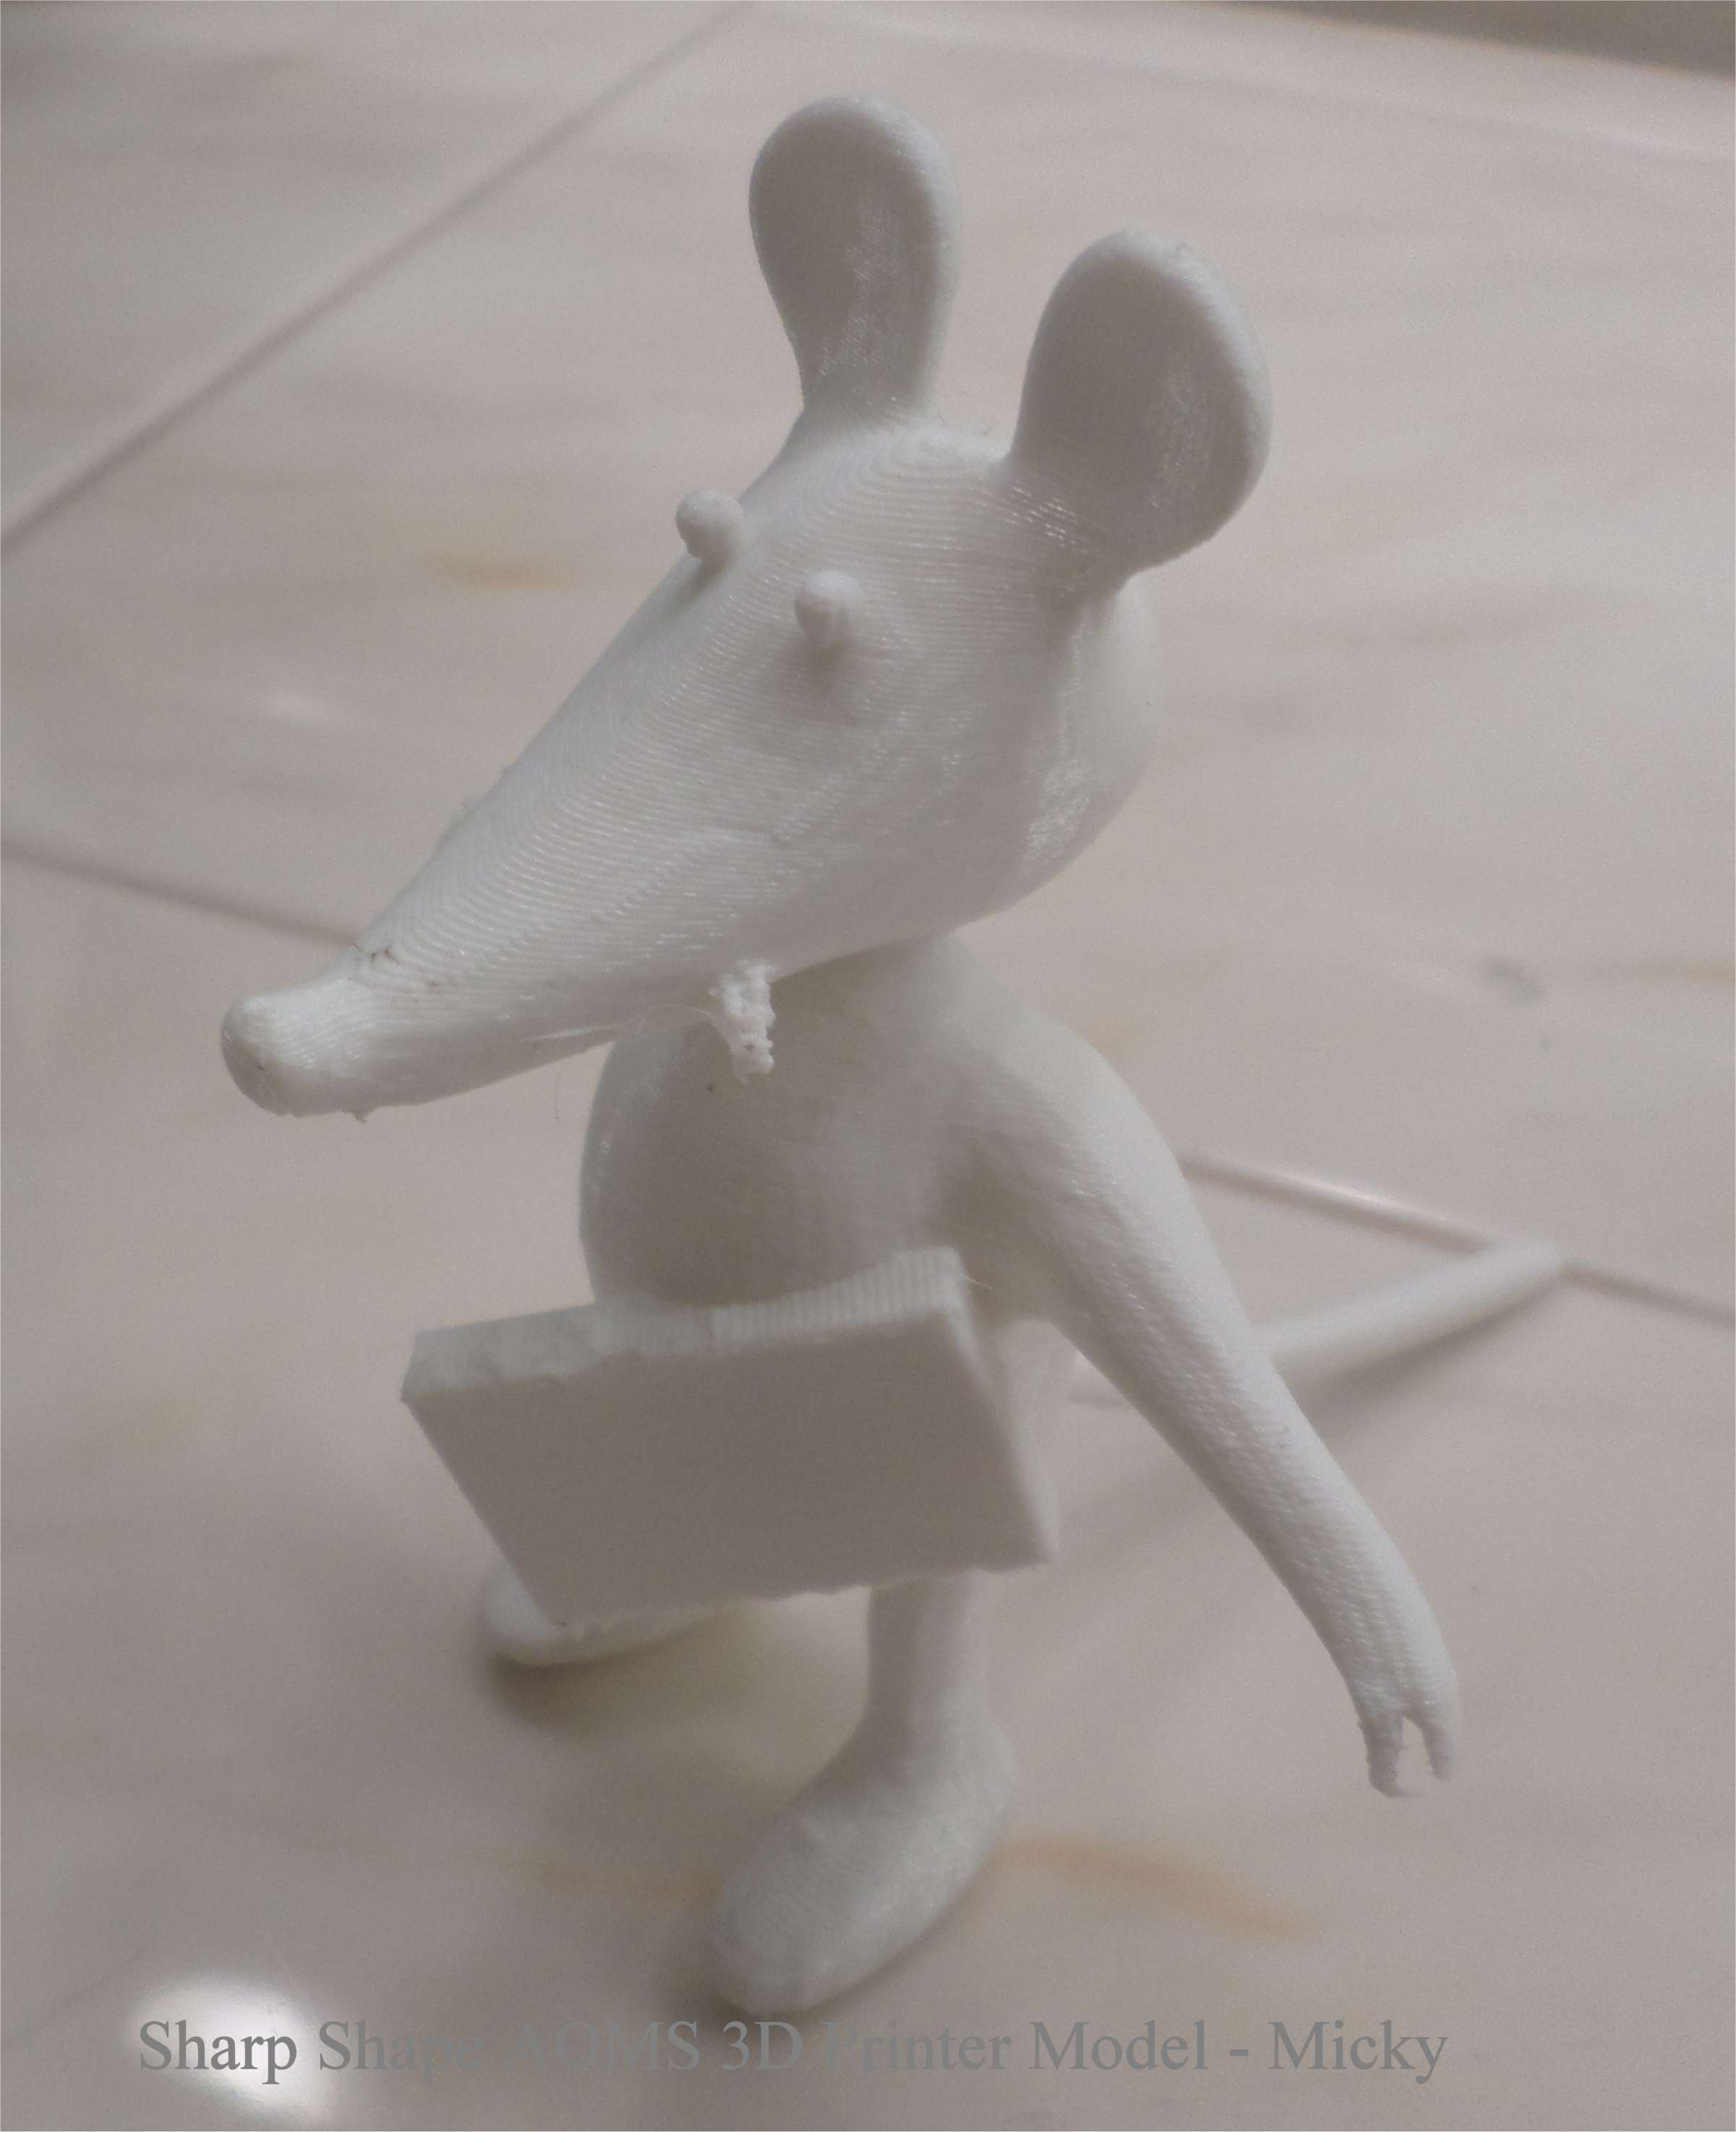 Sharp Shape AOMS 3D Printer Rat Model